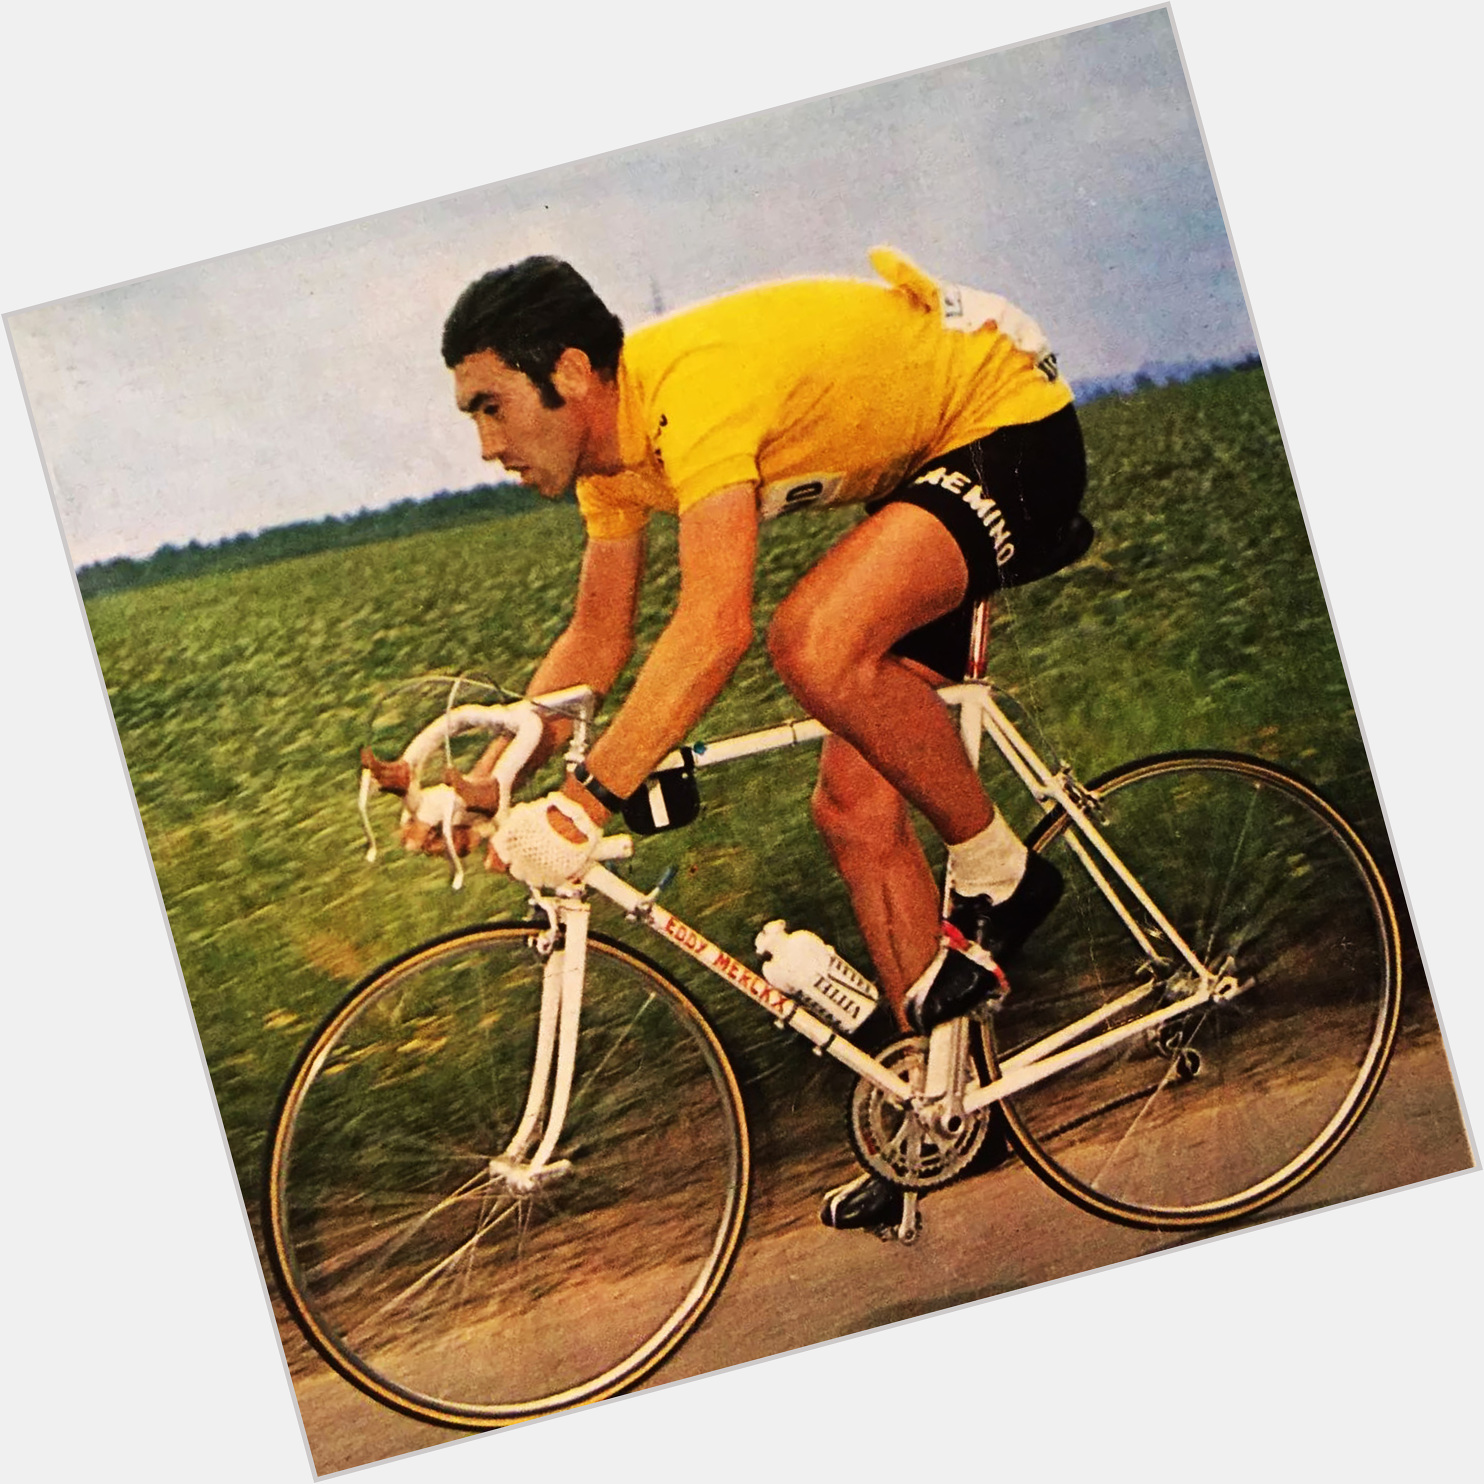 Eddy Merckx birthday 2015